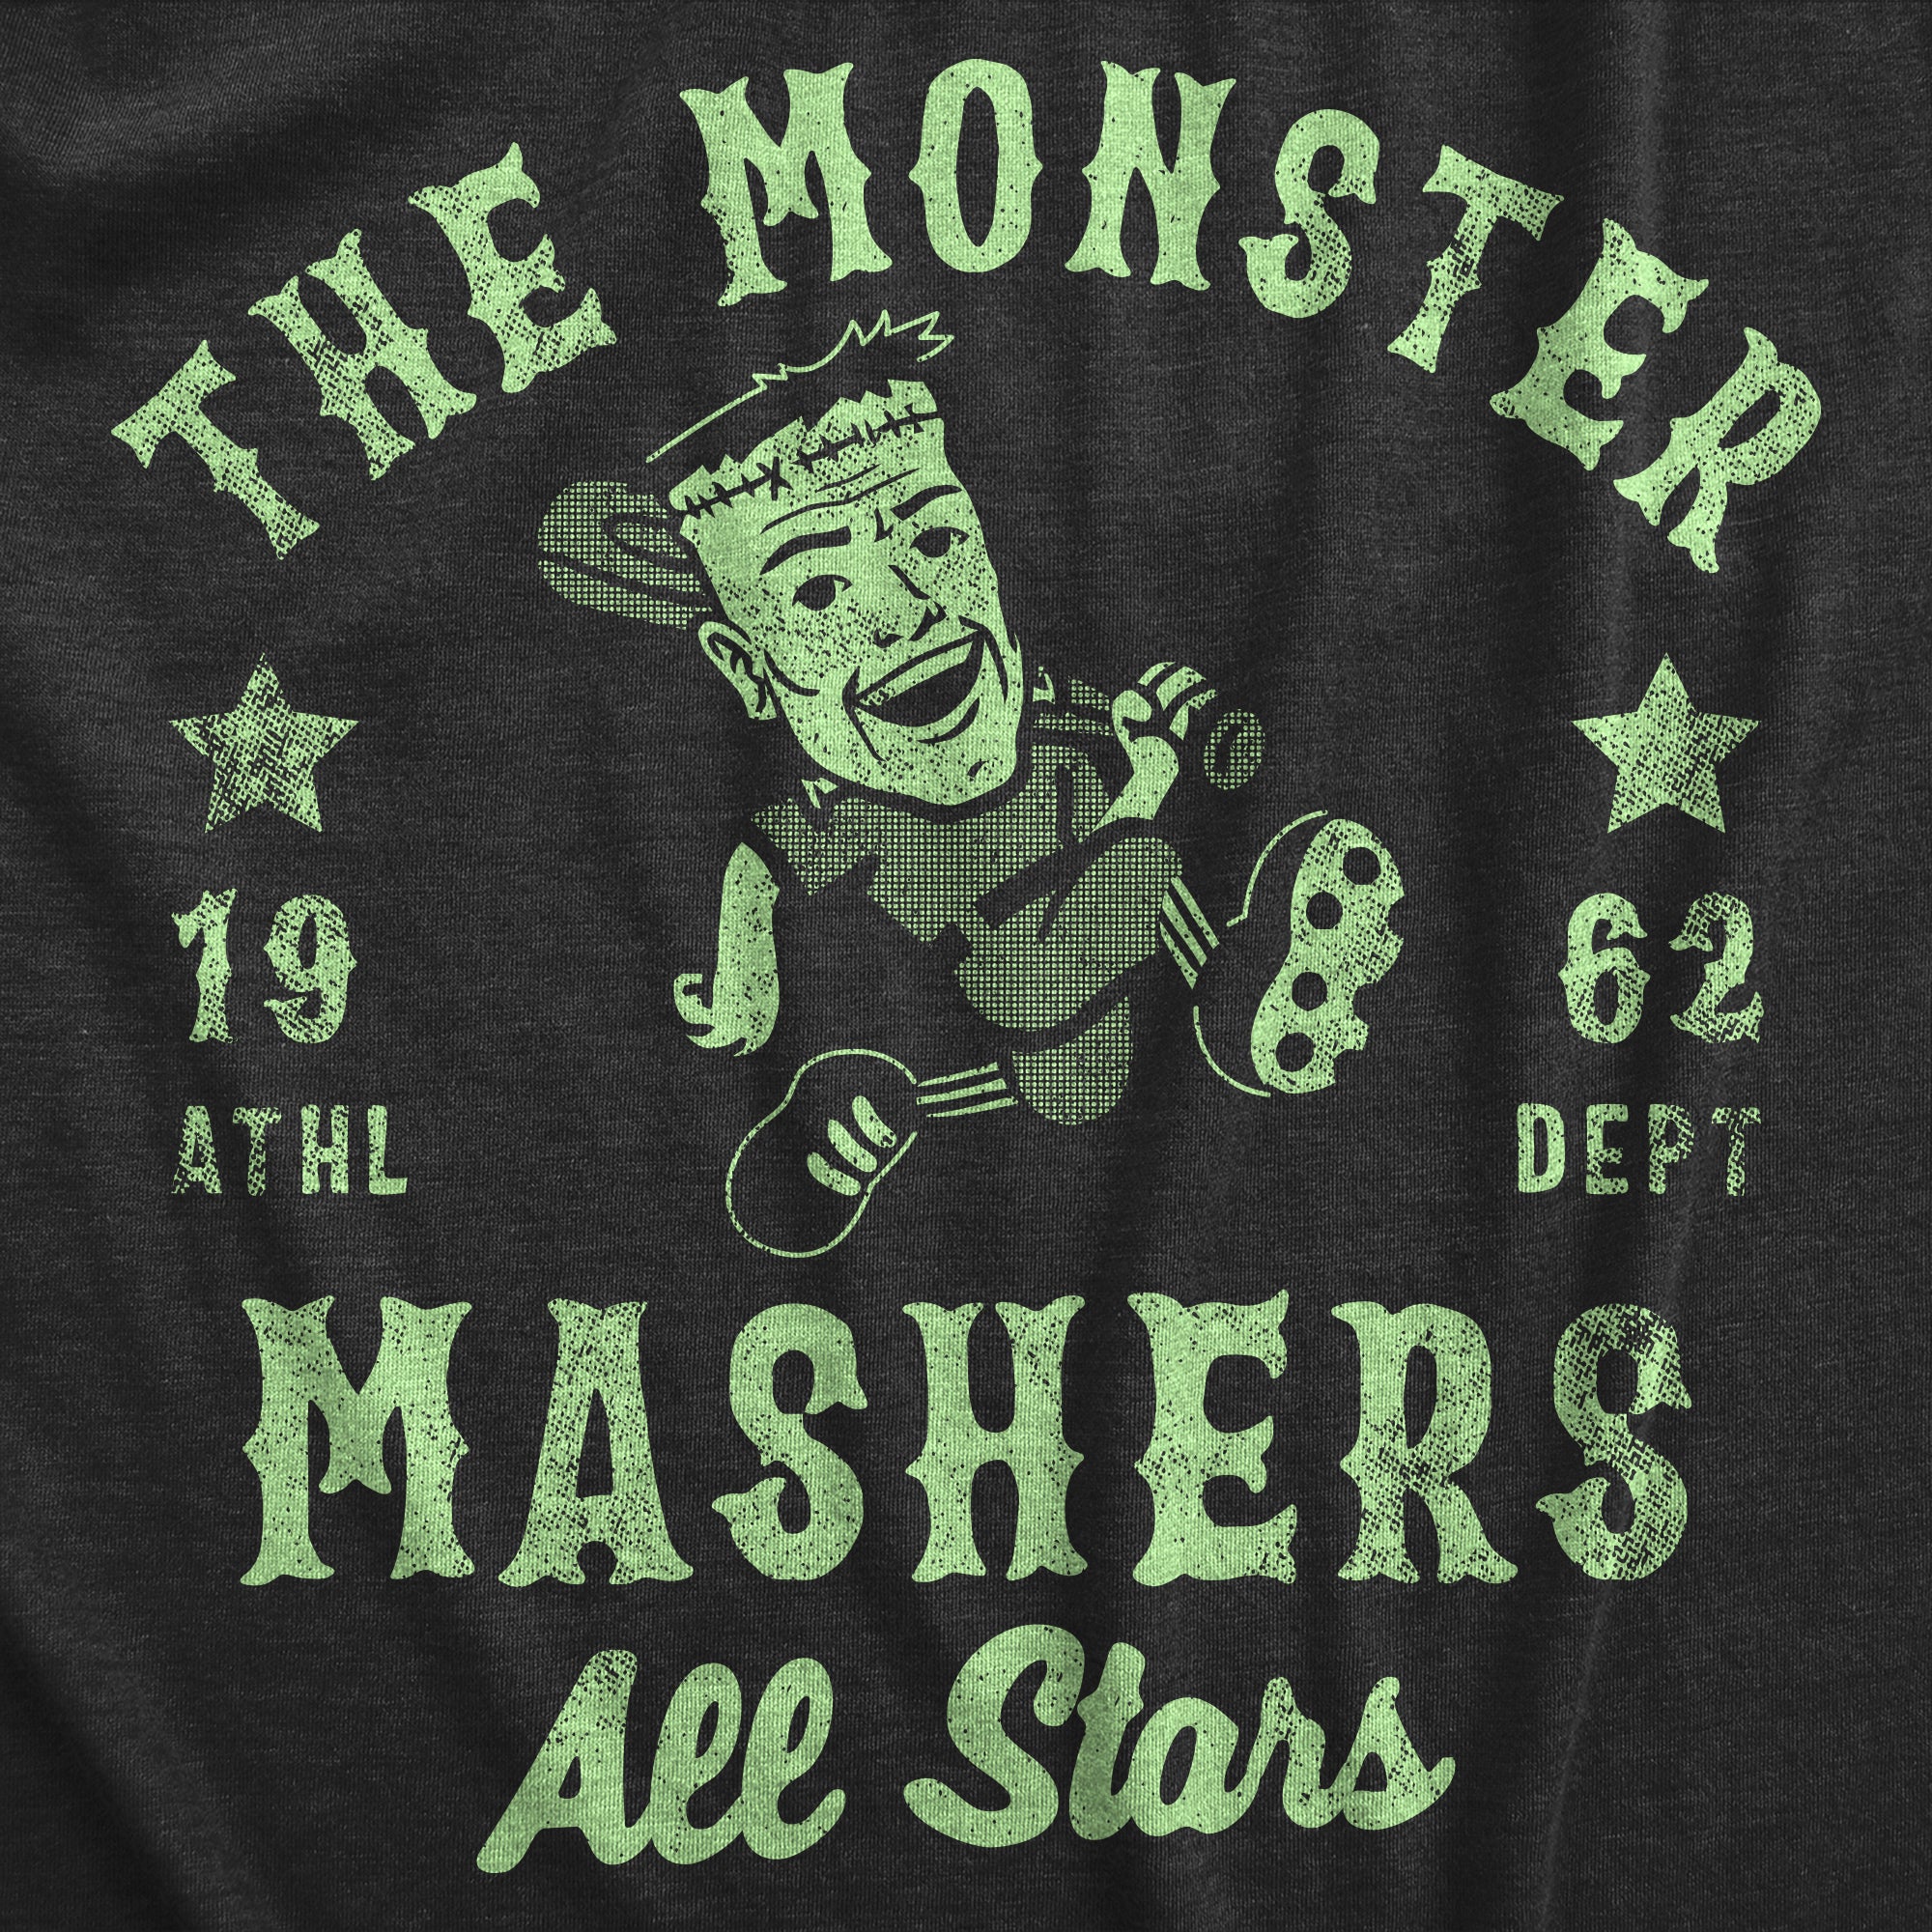 Funny Heather Black - MONSTER The Monster Mashers All Stars Womens T Shirt Nerdy Halloween Baseball Tee